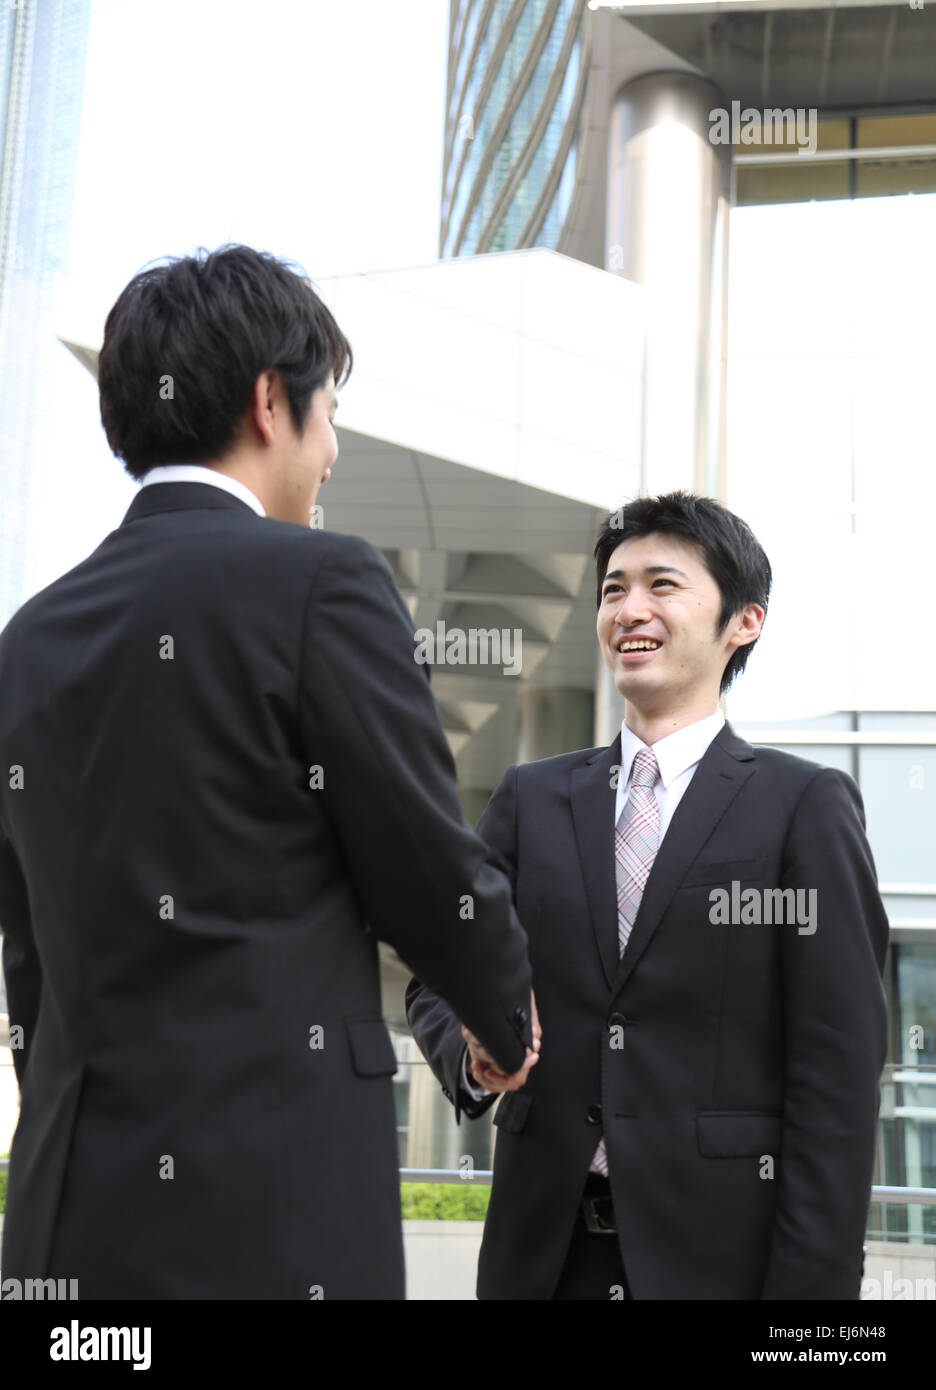 Japanese businessmen shaking hands Stock Photo